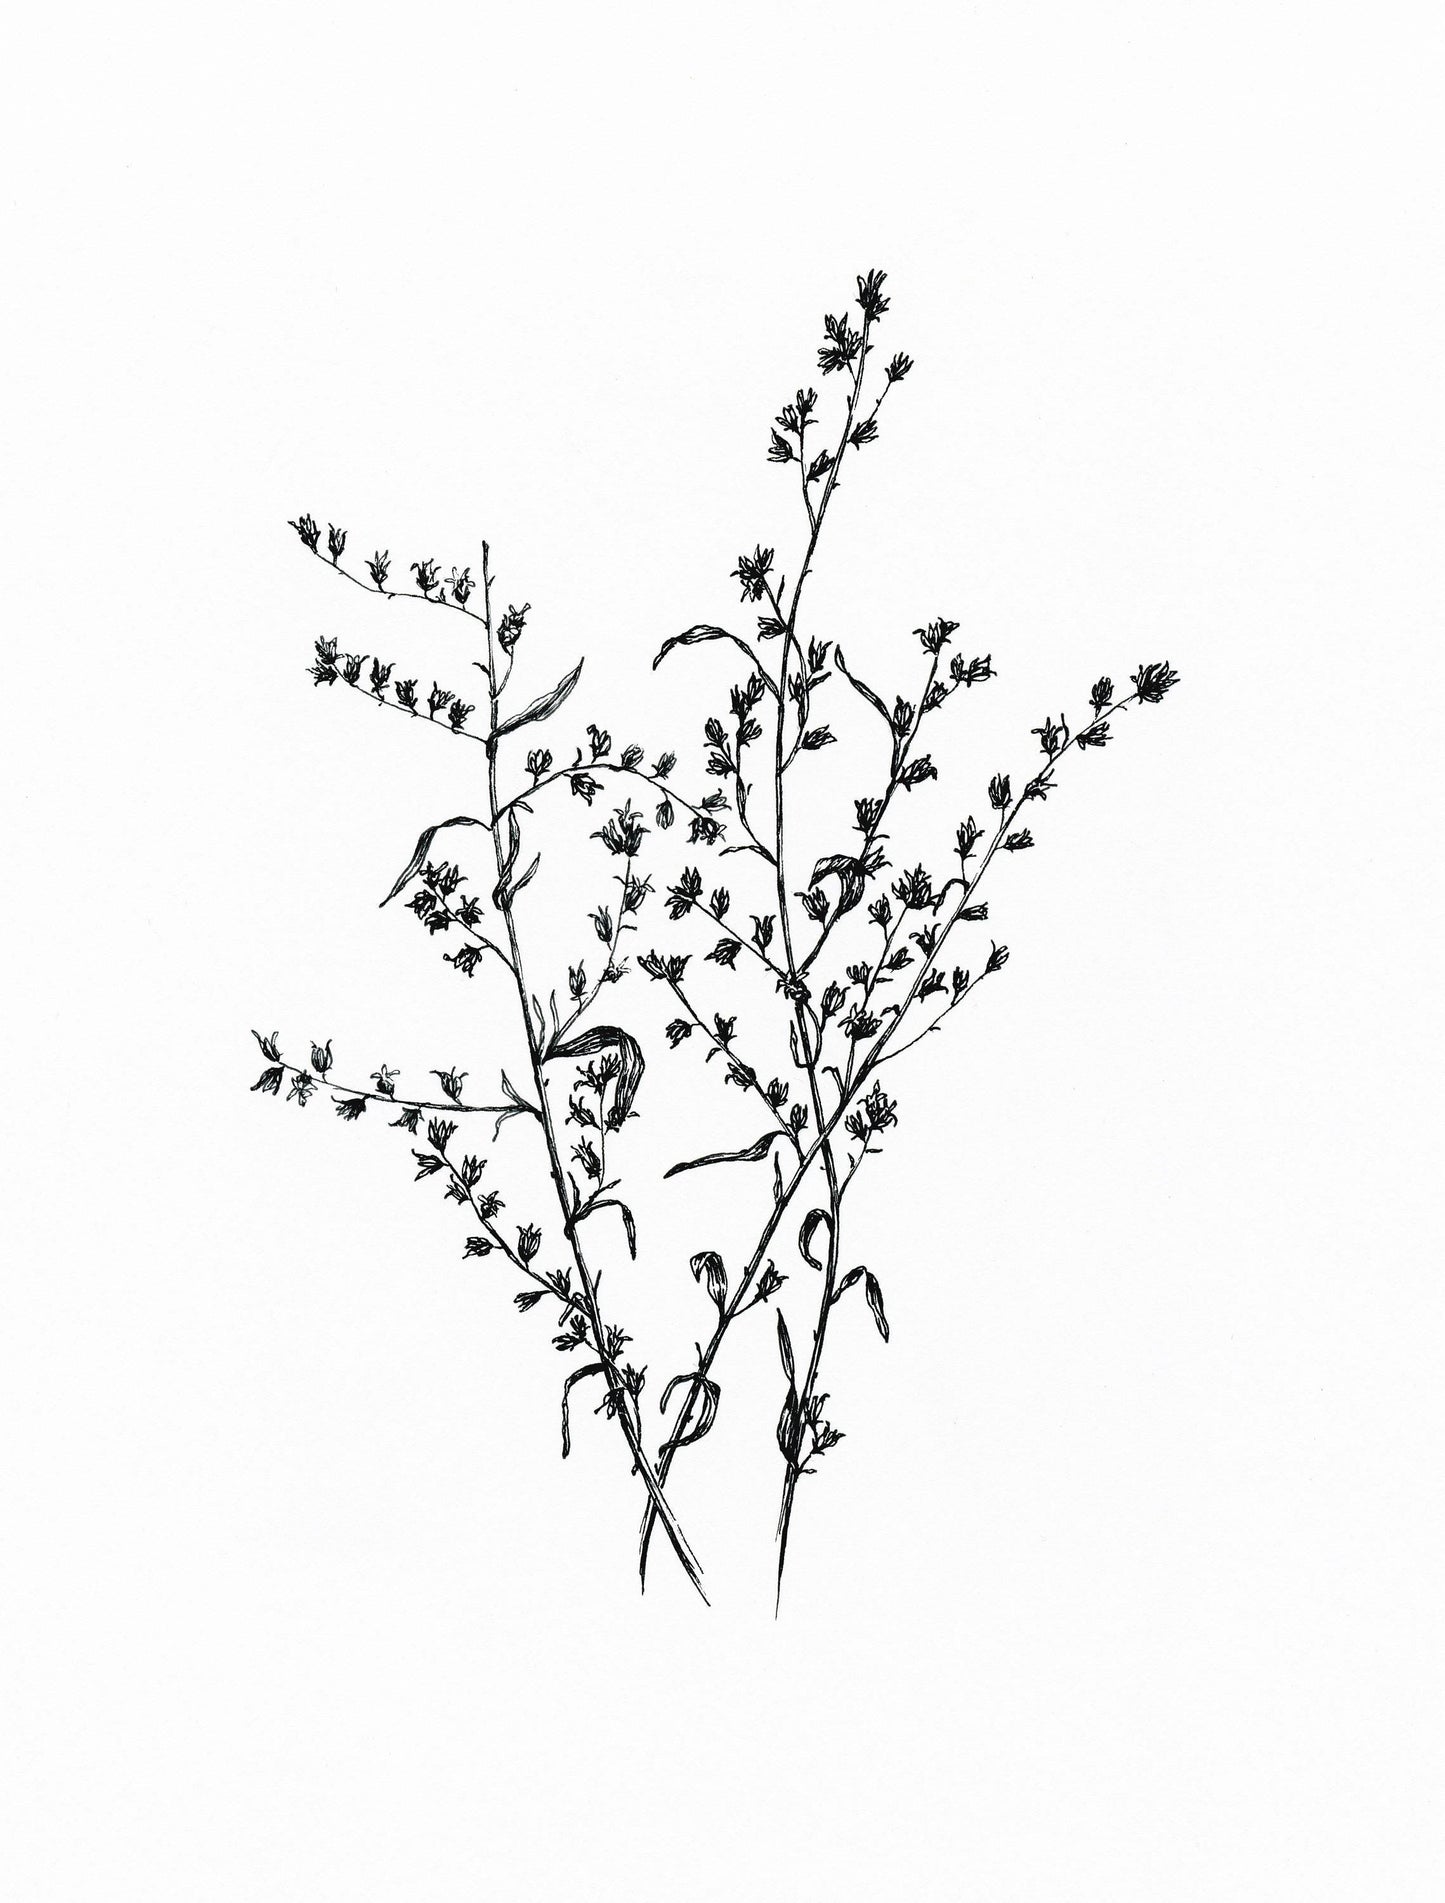 'Wildflowers' Original Ink Illustration. 8x10in